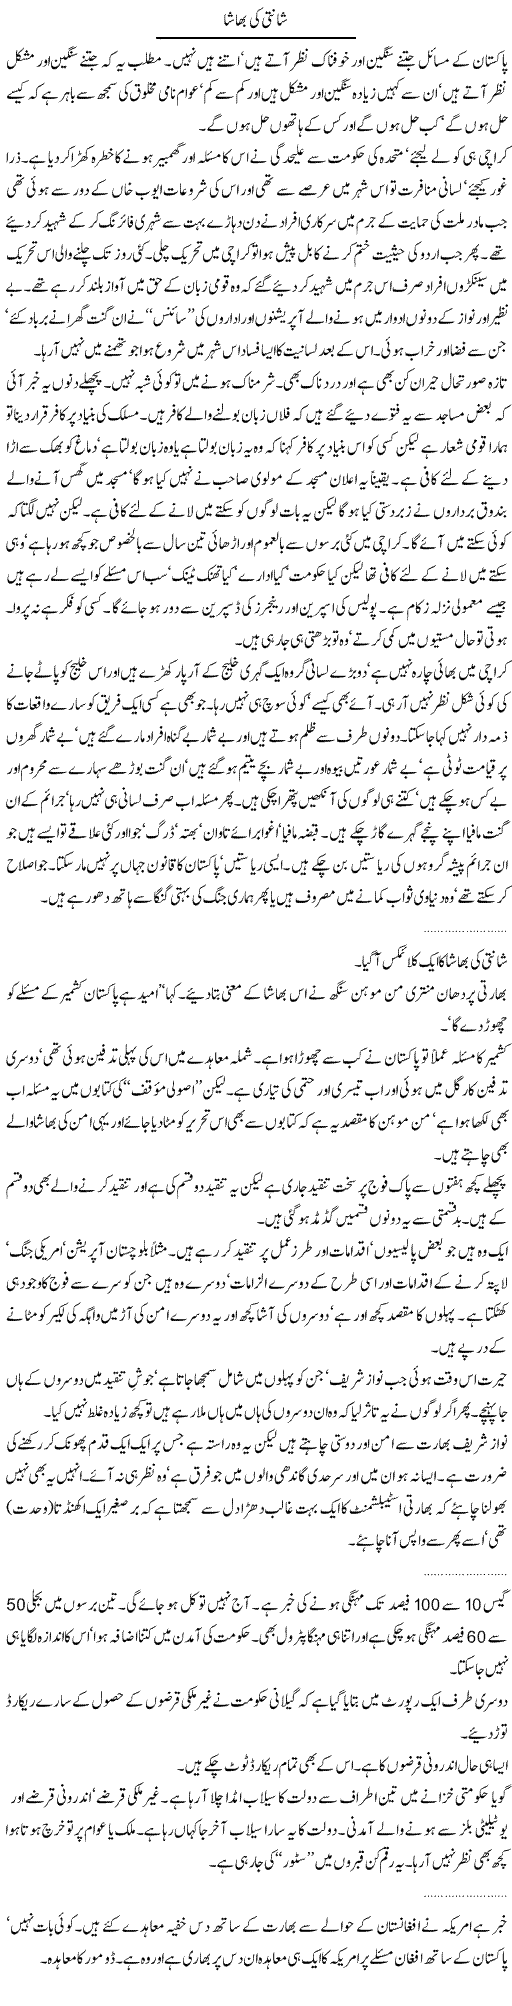 Fights in Pakistan Express Column Abdullah Tariq 1 July 2011